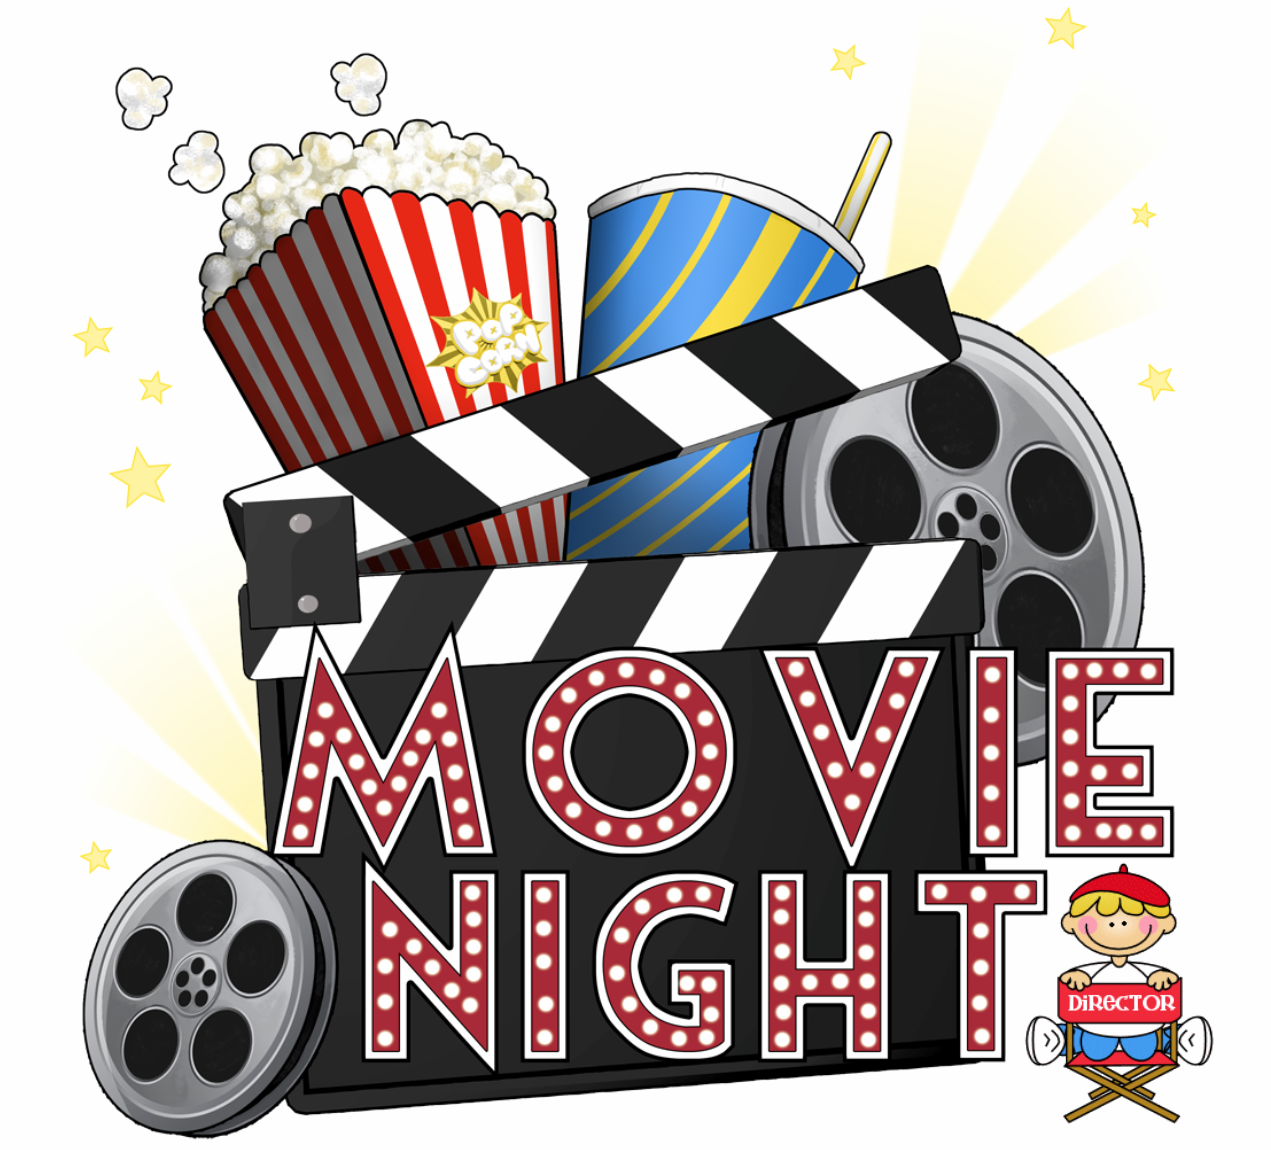 Movie Night logo with popcorn, soda and film reel graphics.